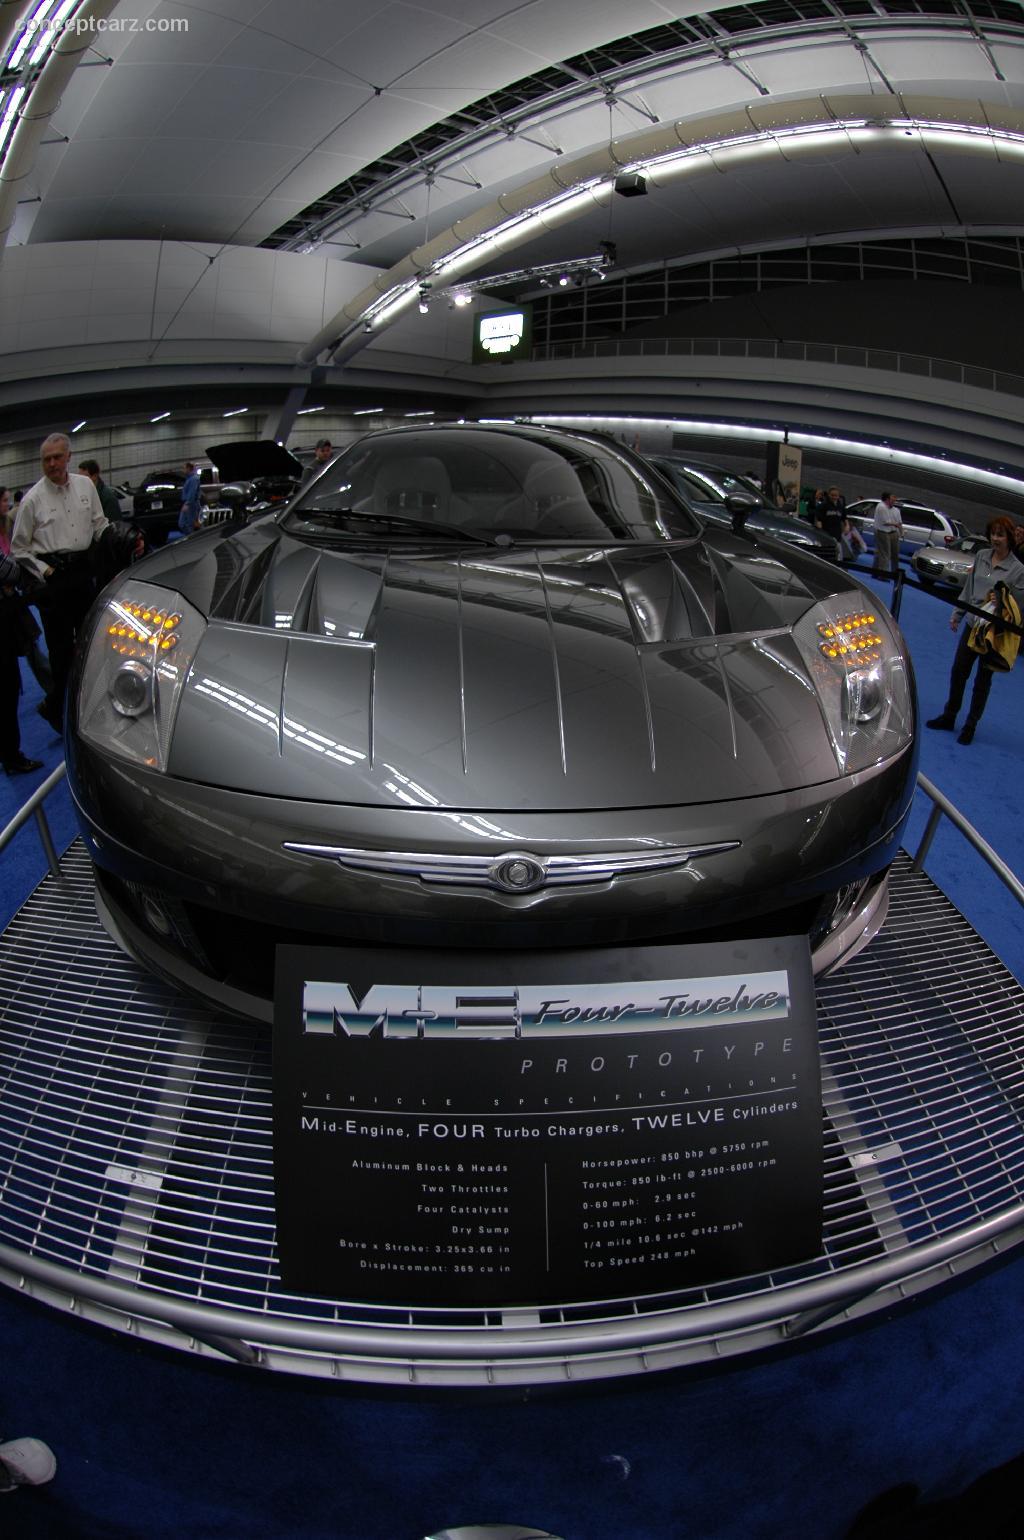 Chrysler composite concept vehicle #1